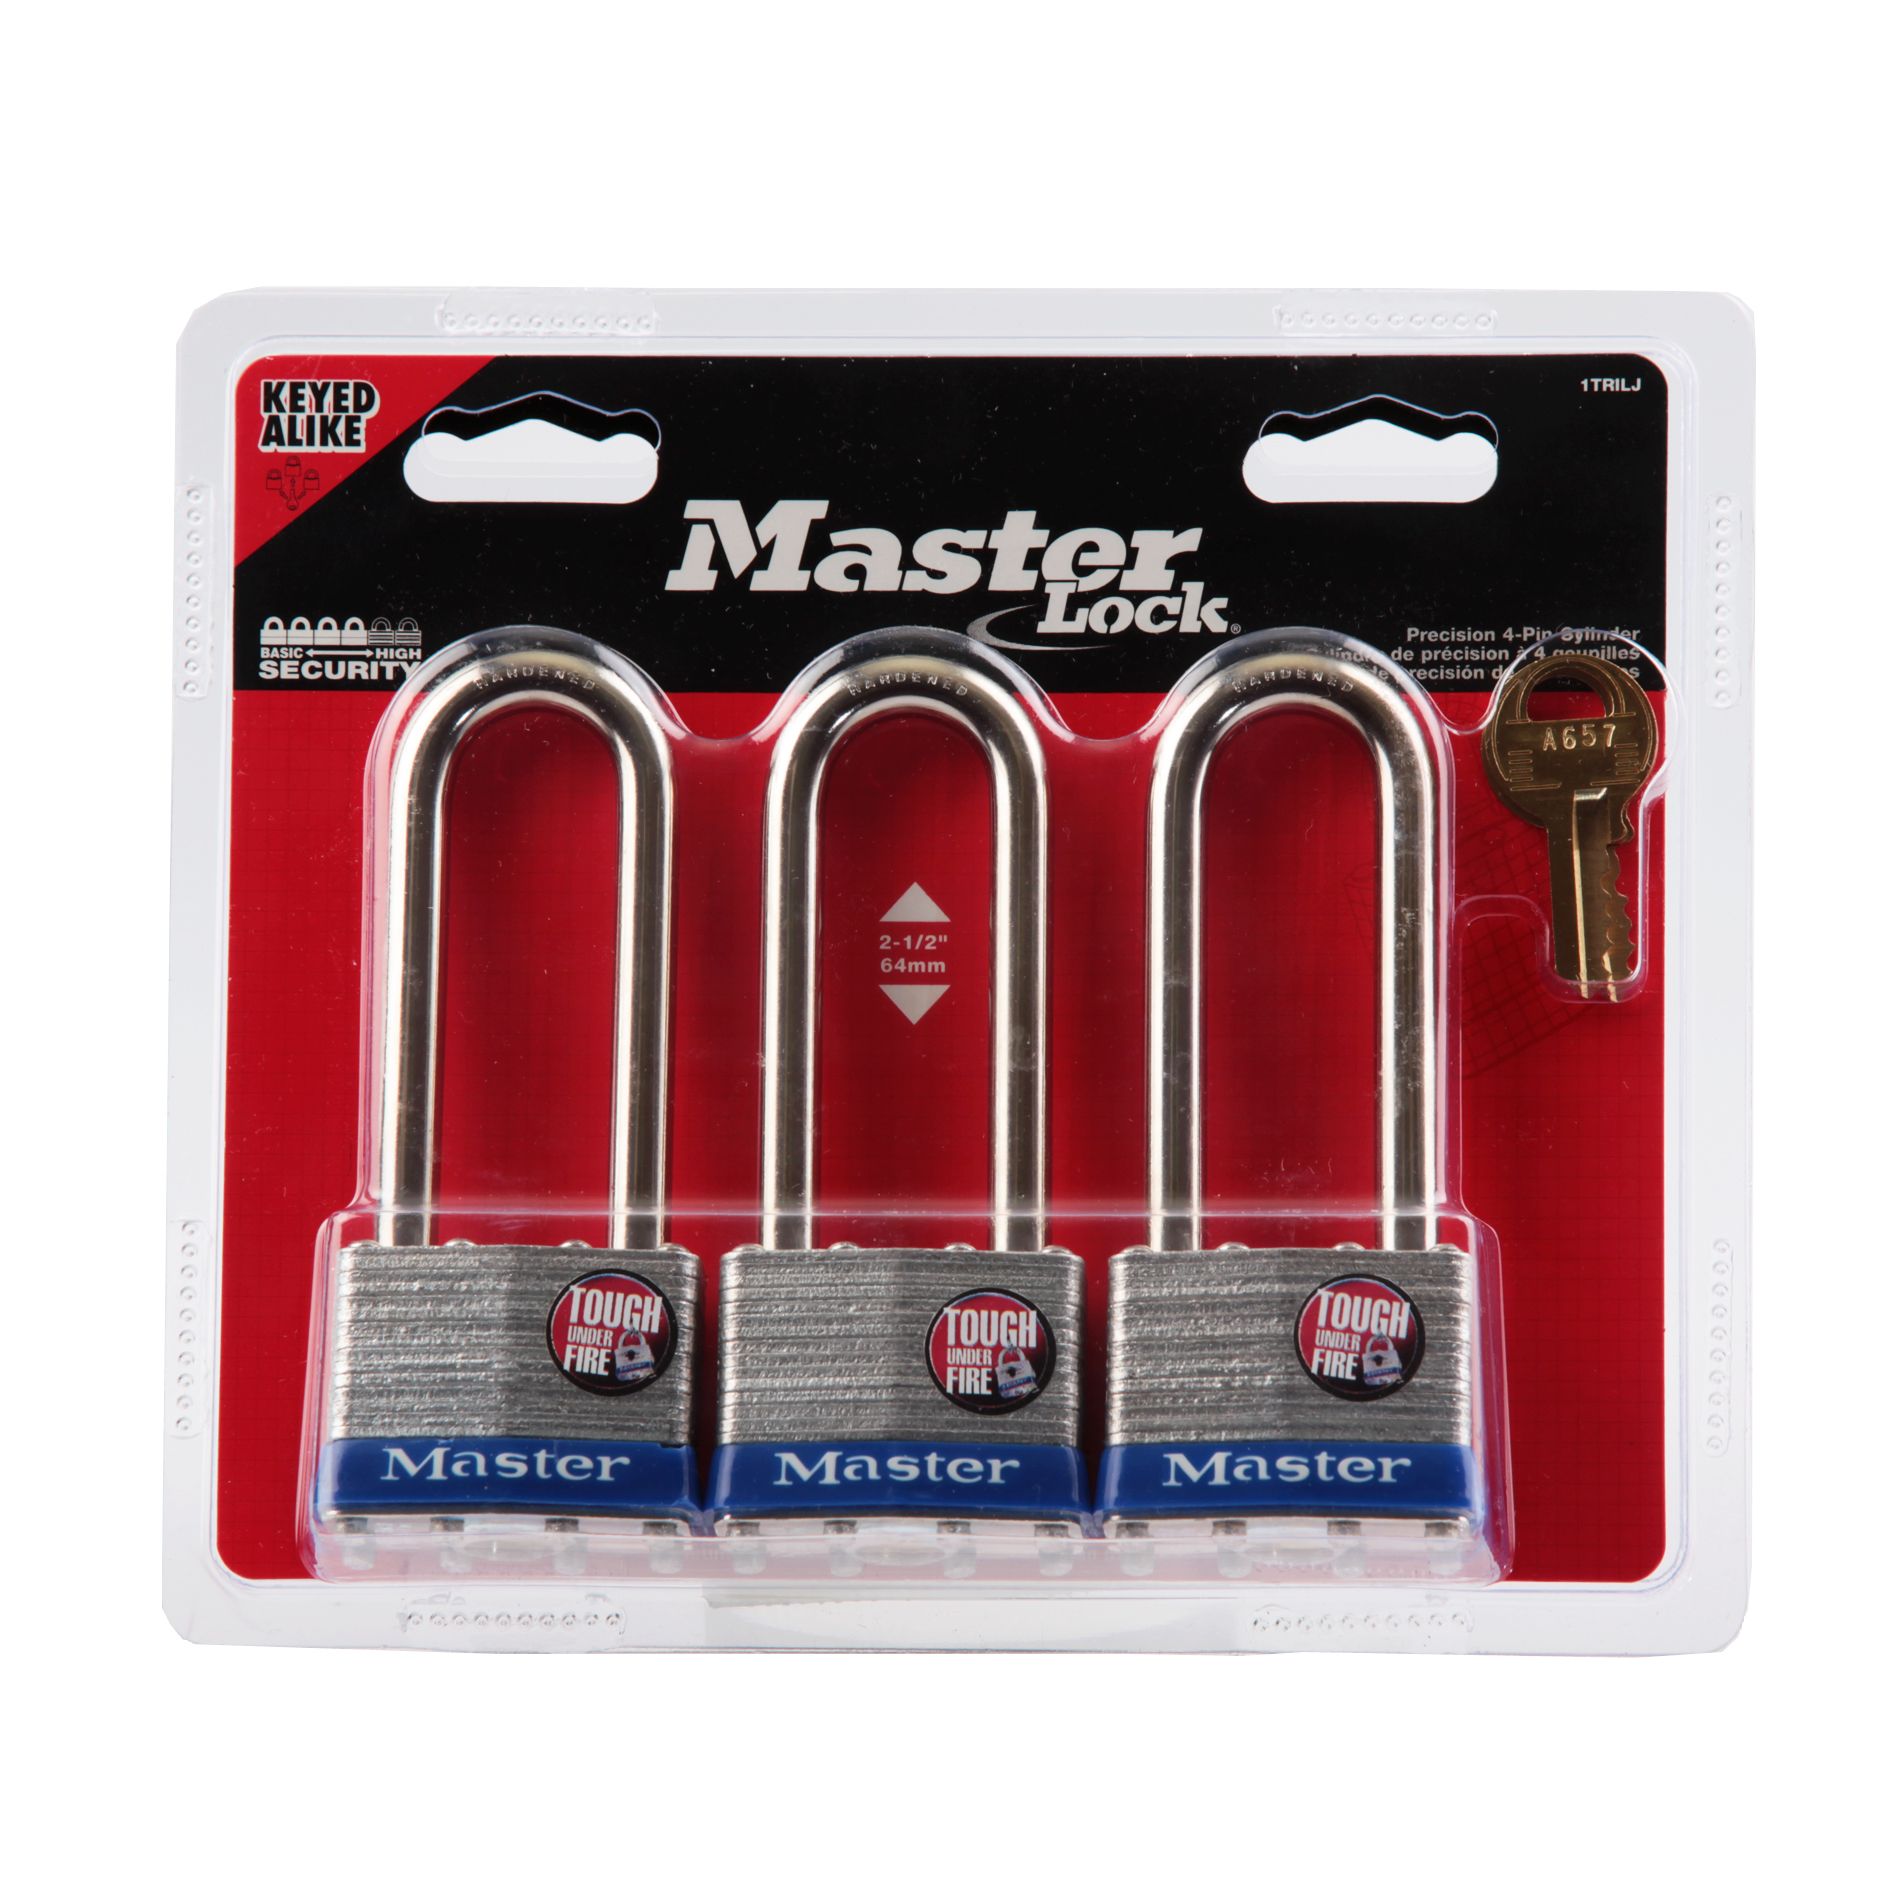 Master Lock 1-3/4" Padlocks 3 Pack